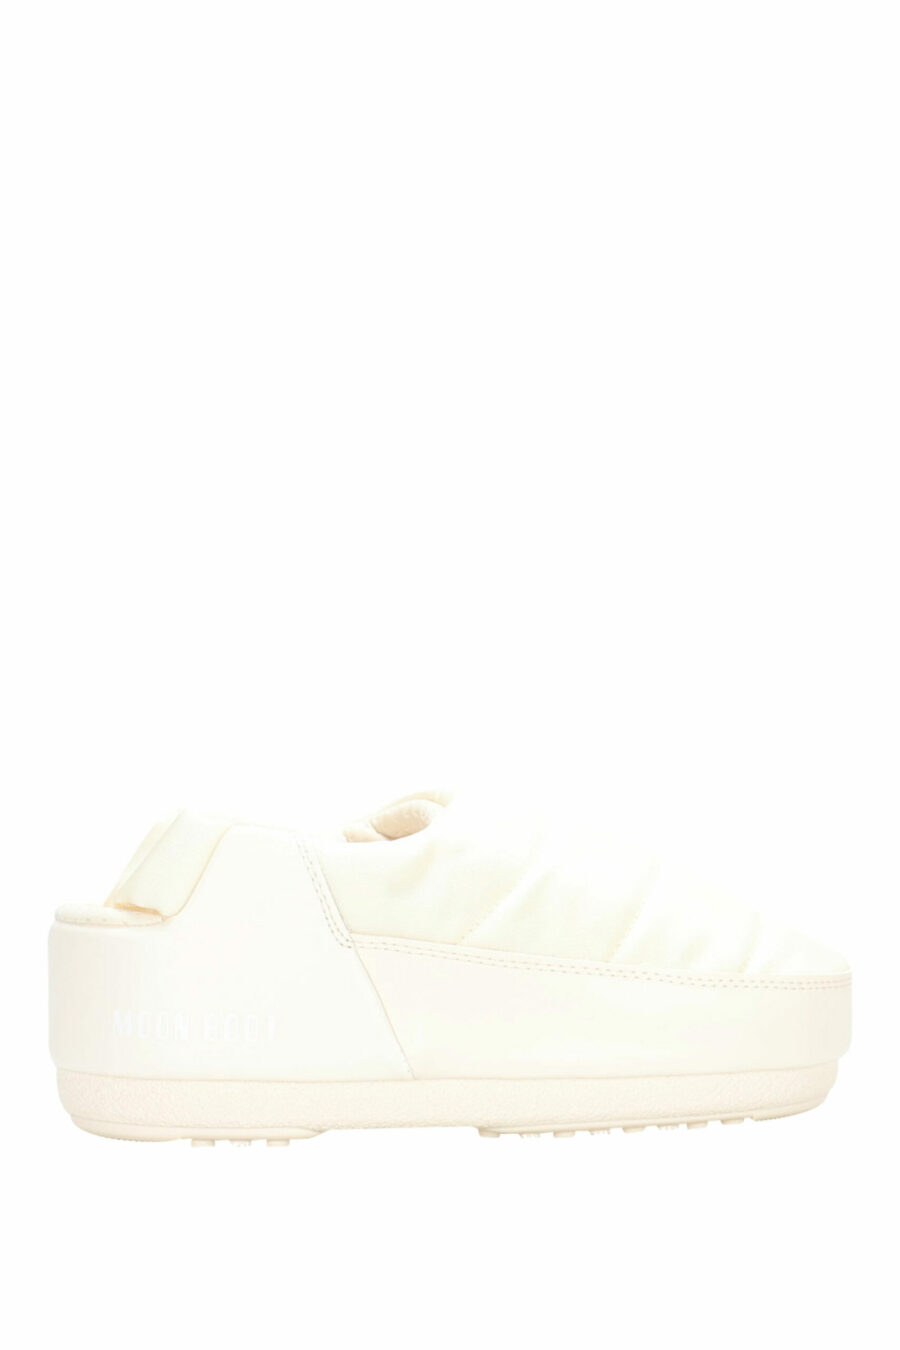 Sandales blanches avec mini-logo blanc - 8050032004080